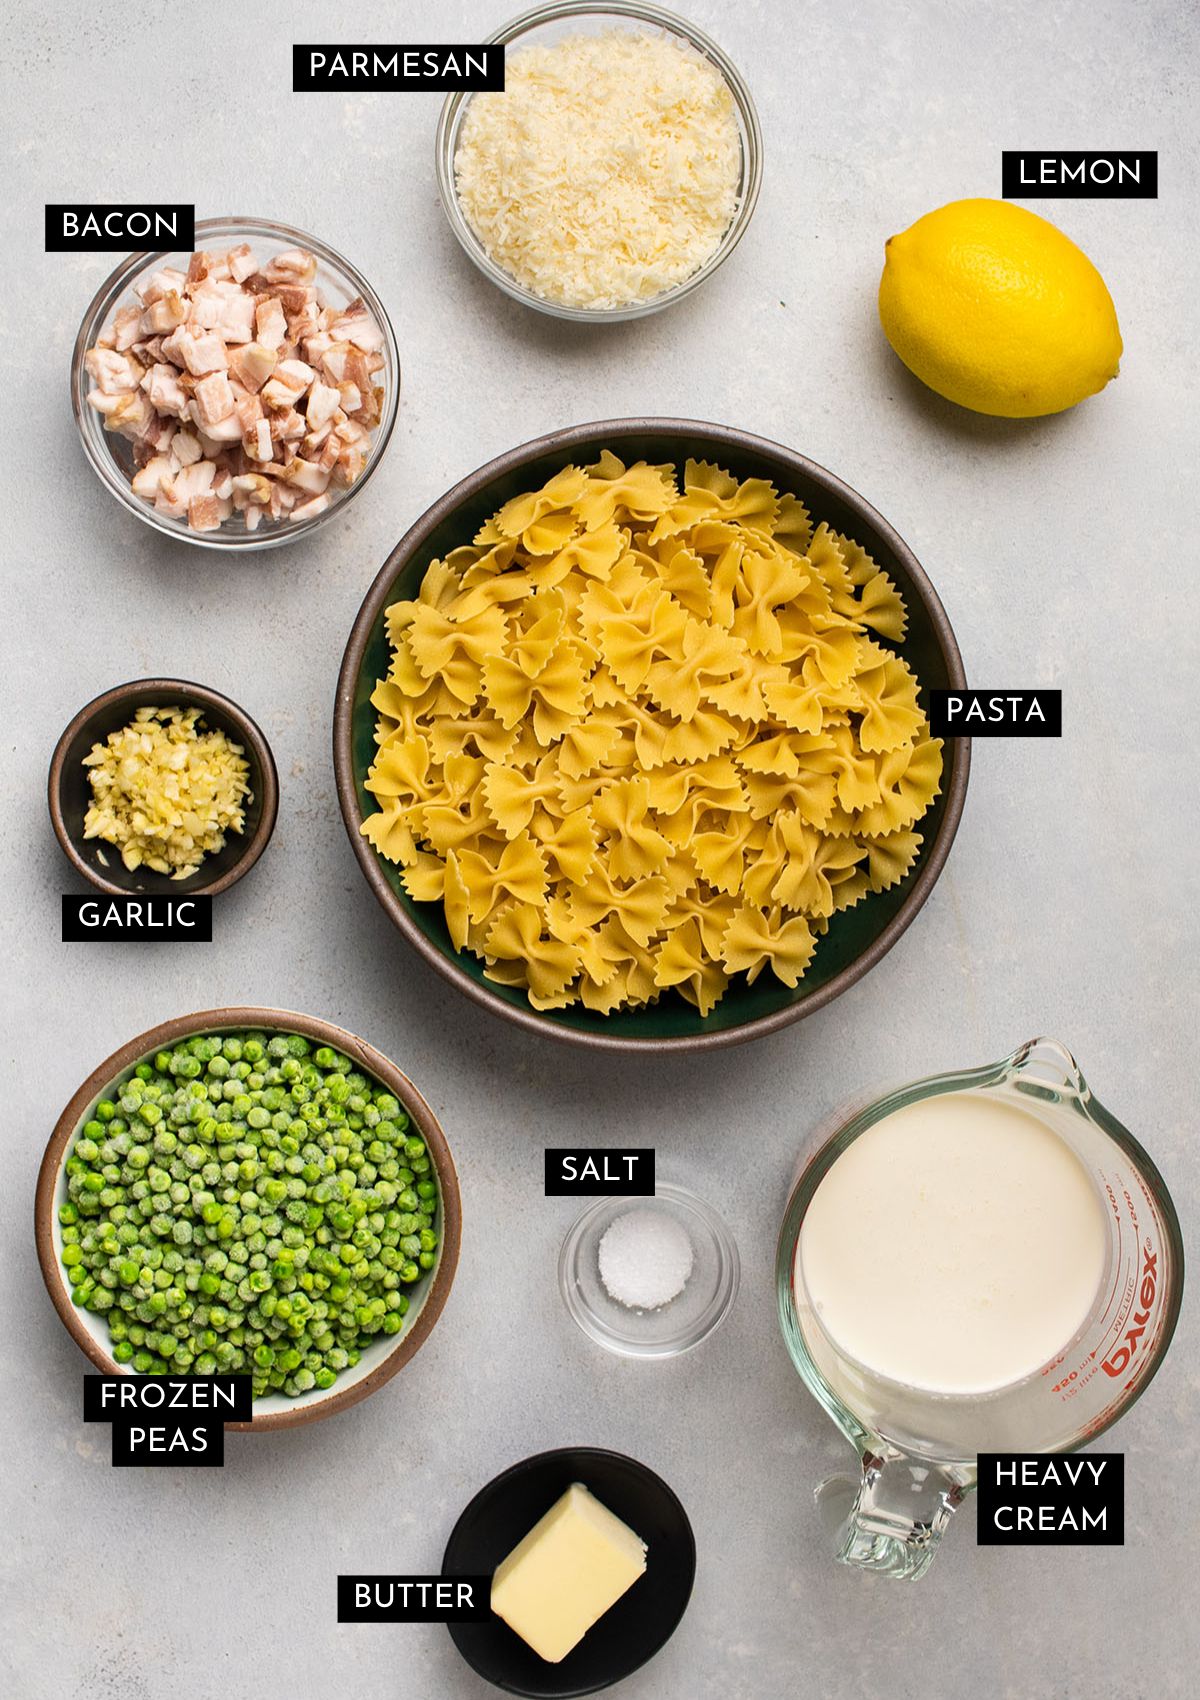 Pasta ingredients organized into individual bowls.